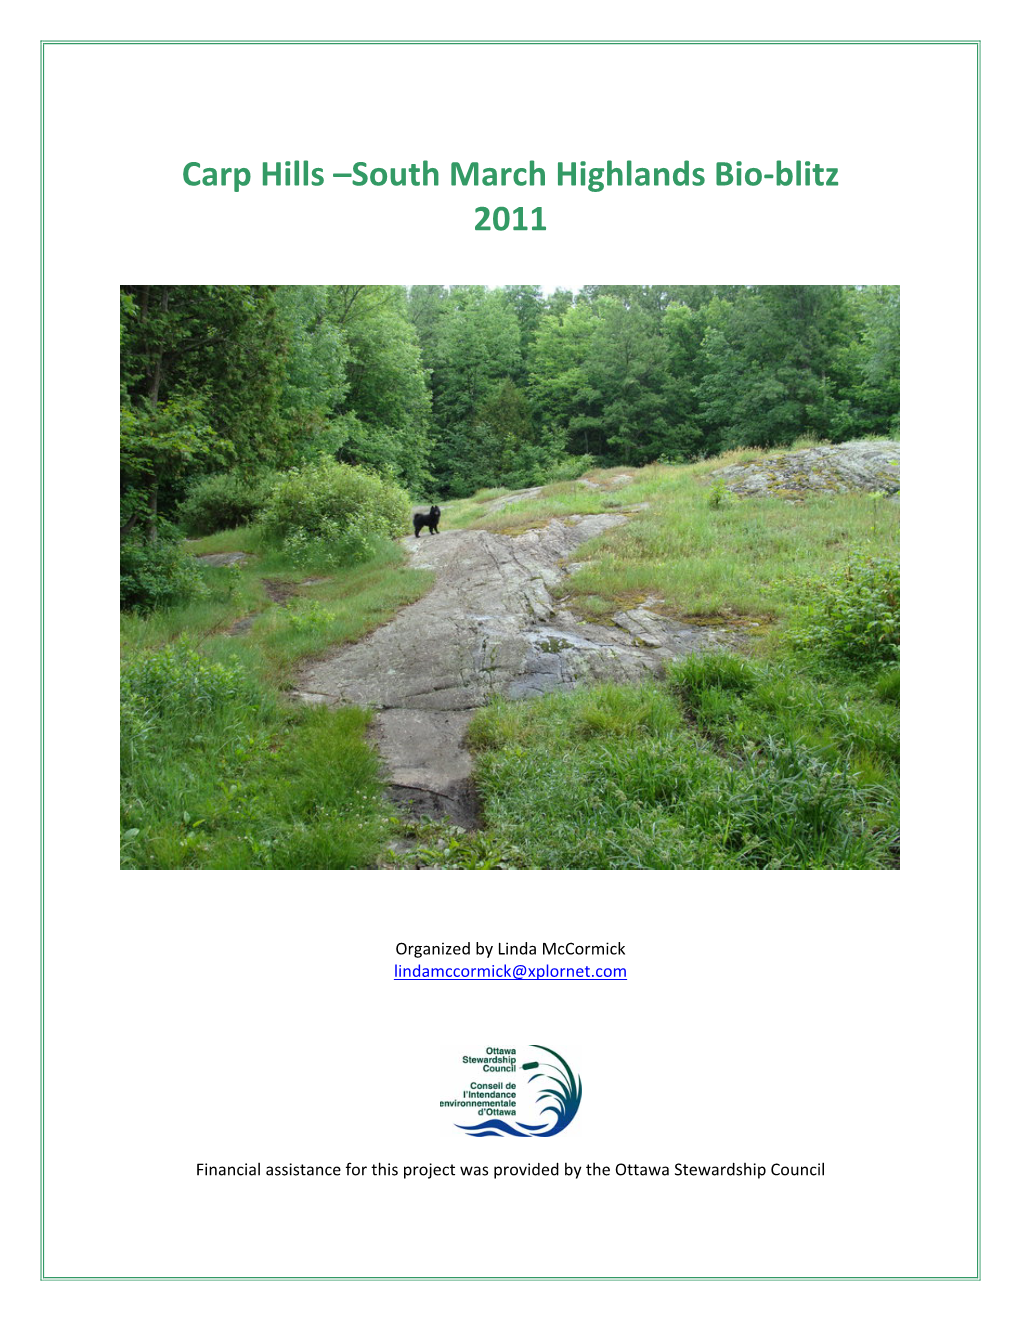 Carp Hills/South March Highlands Bio-Blitz 2011 (PDF)